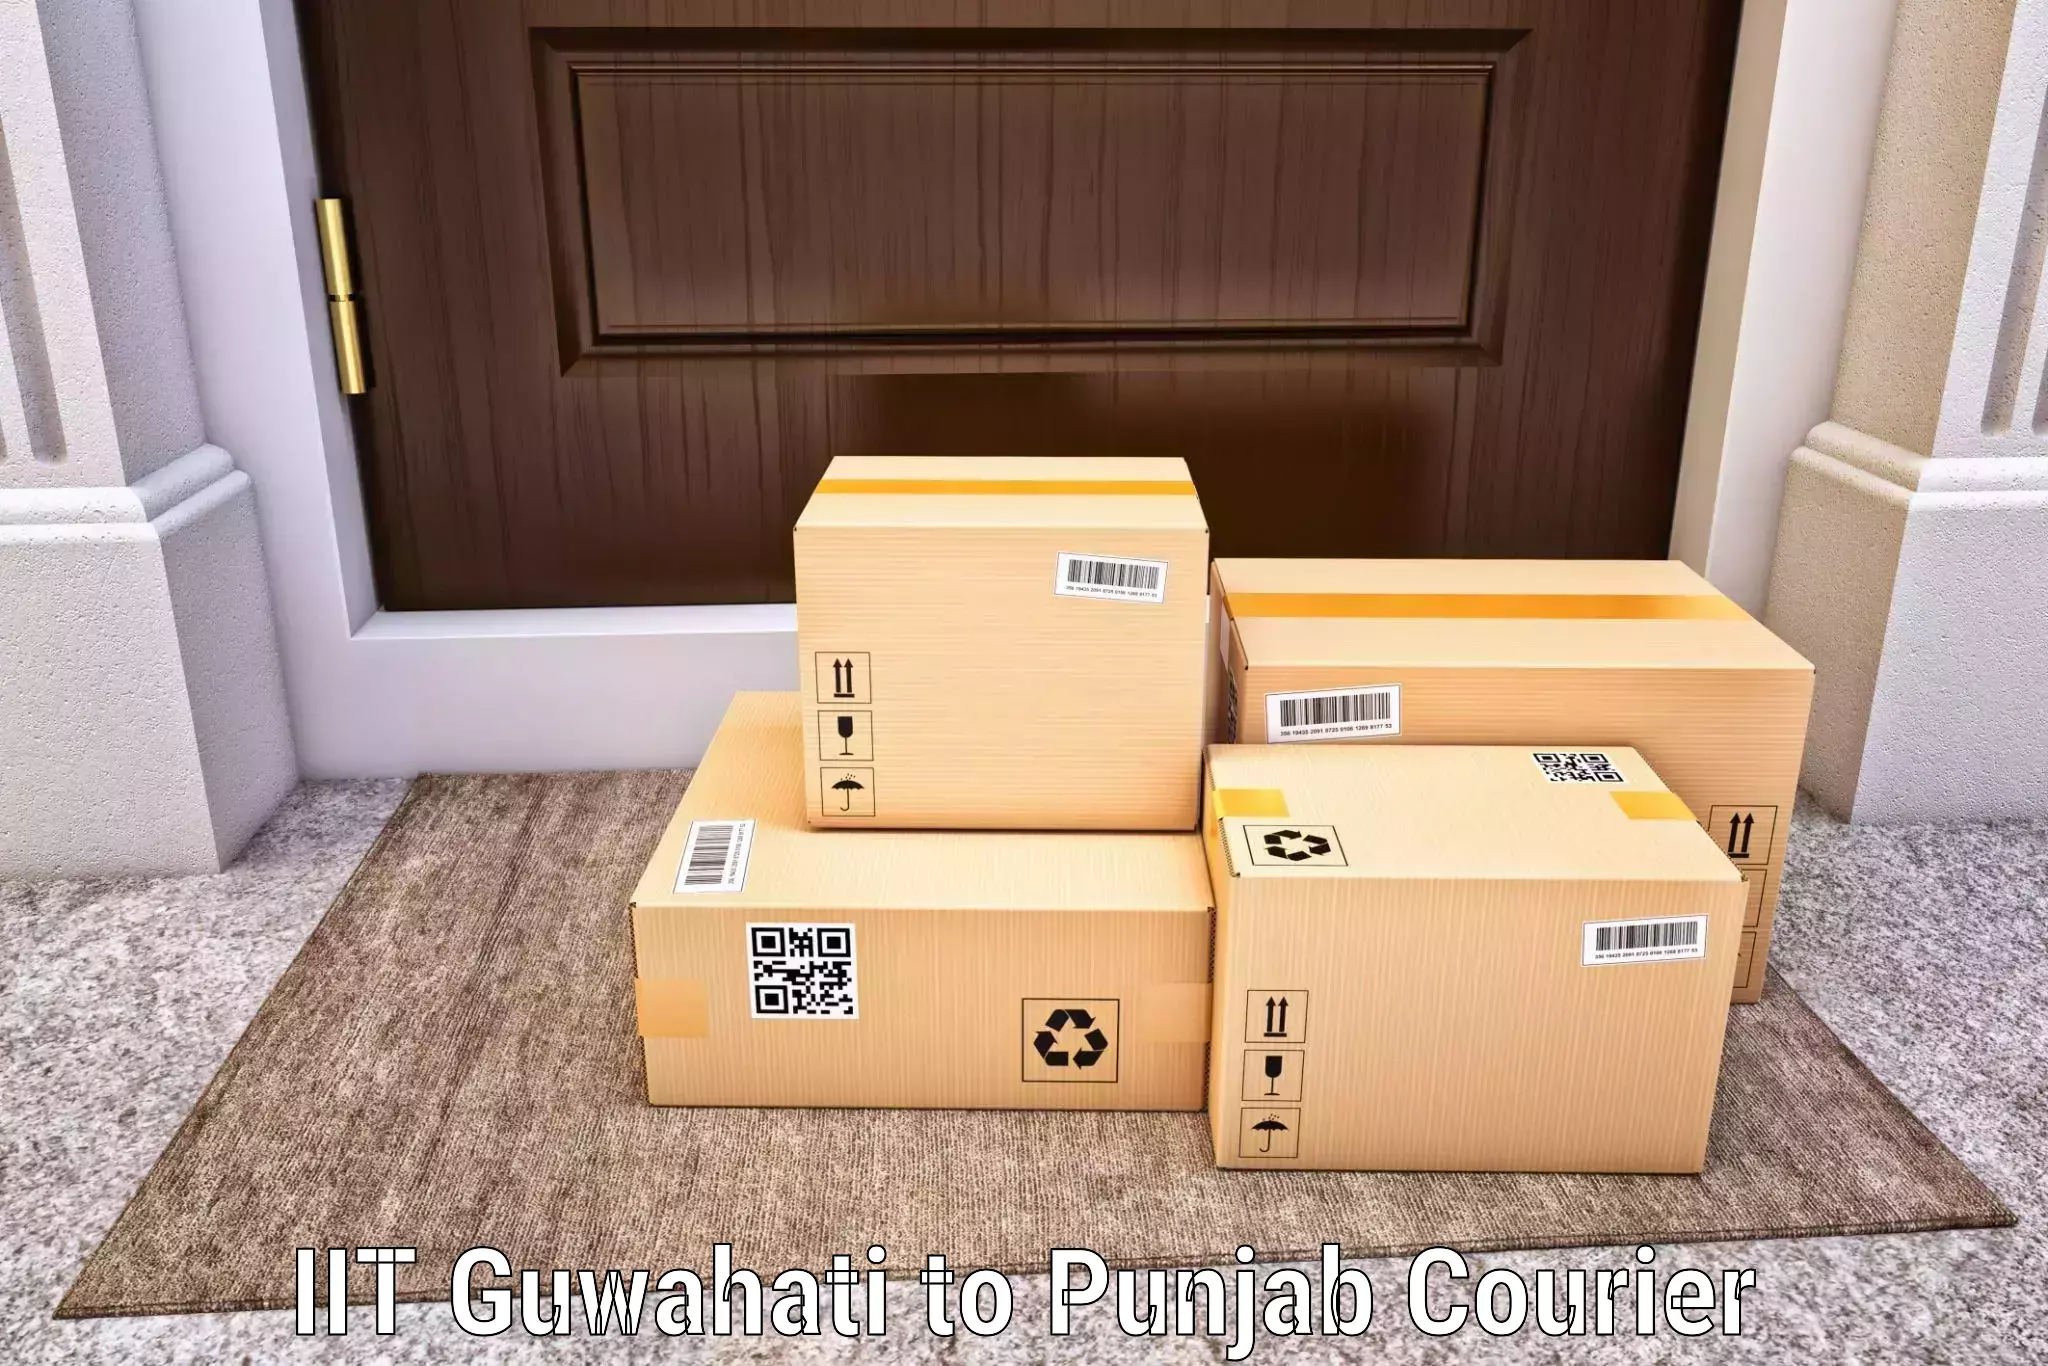 On-demand shipping options IIT Guwahati to Punjab